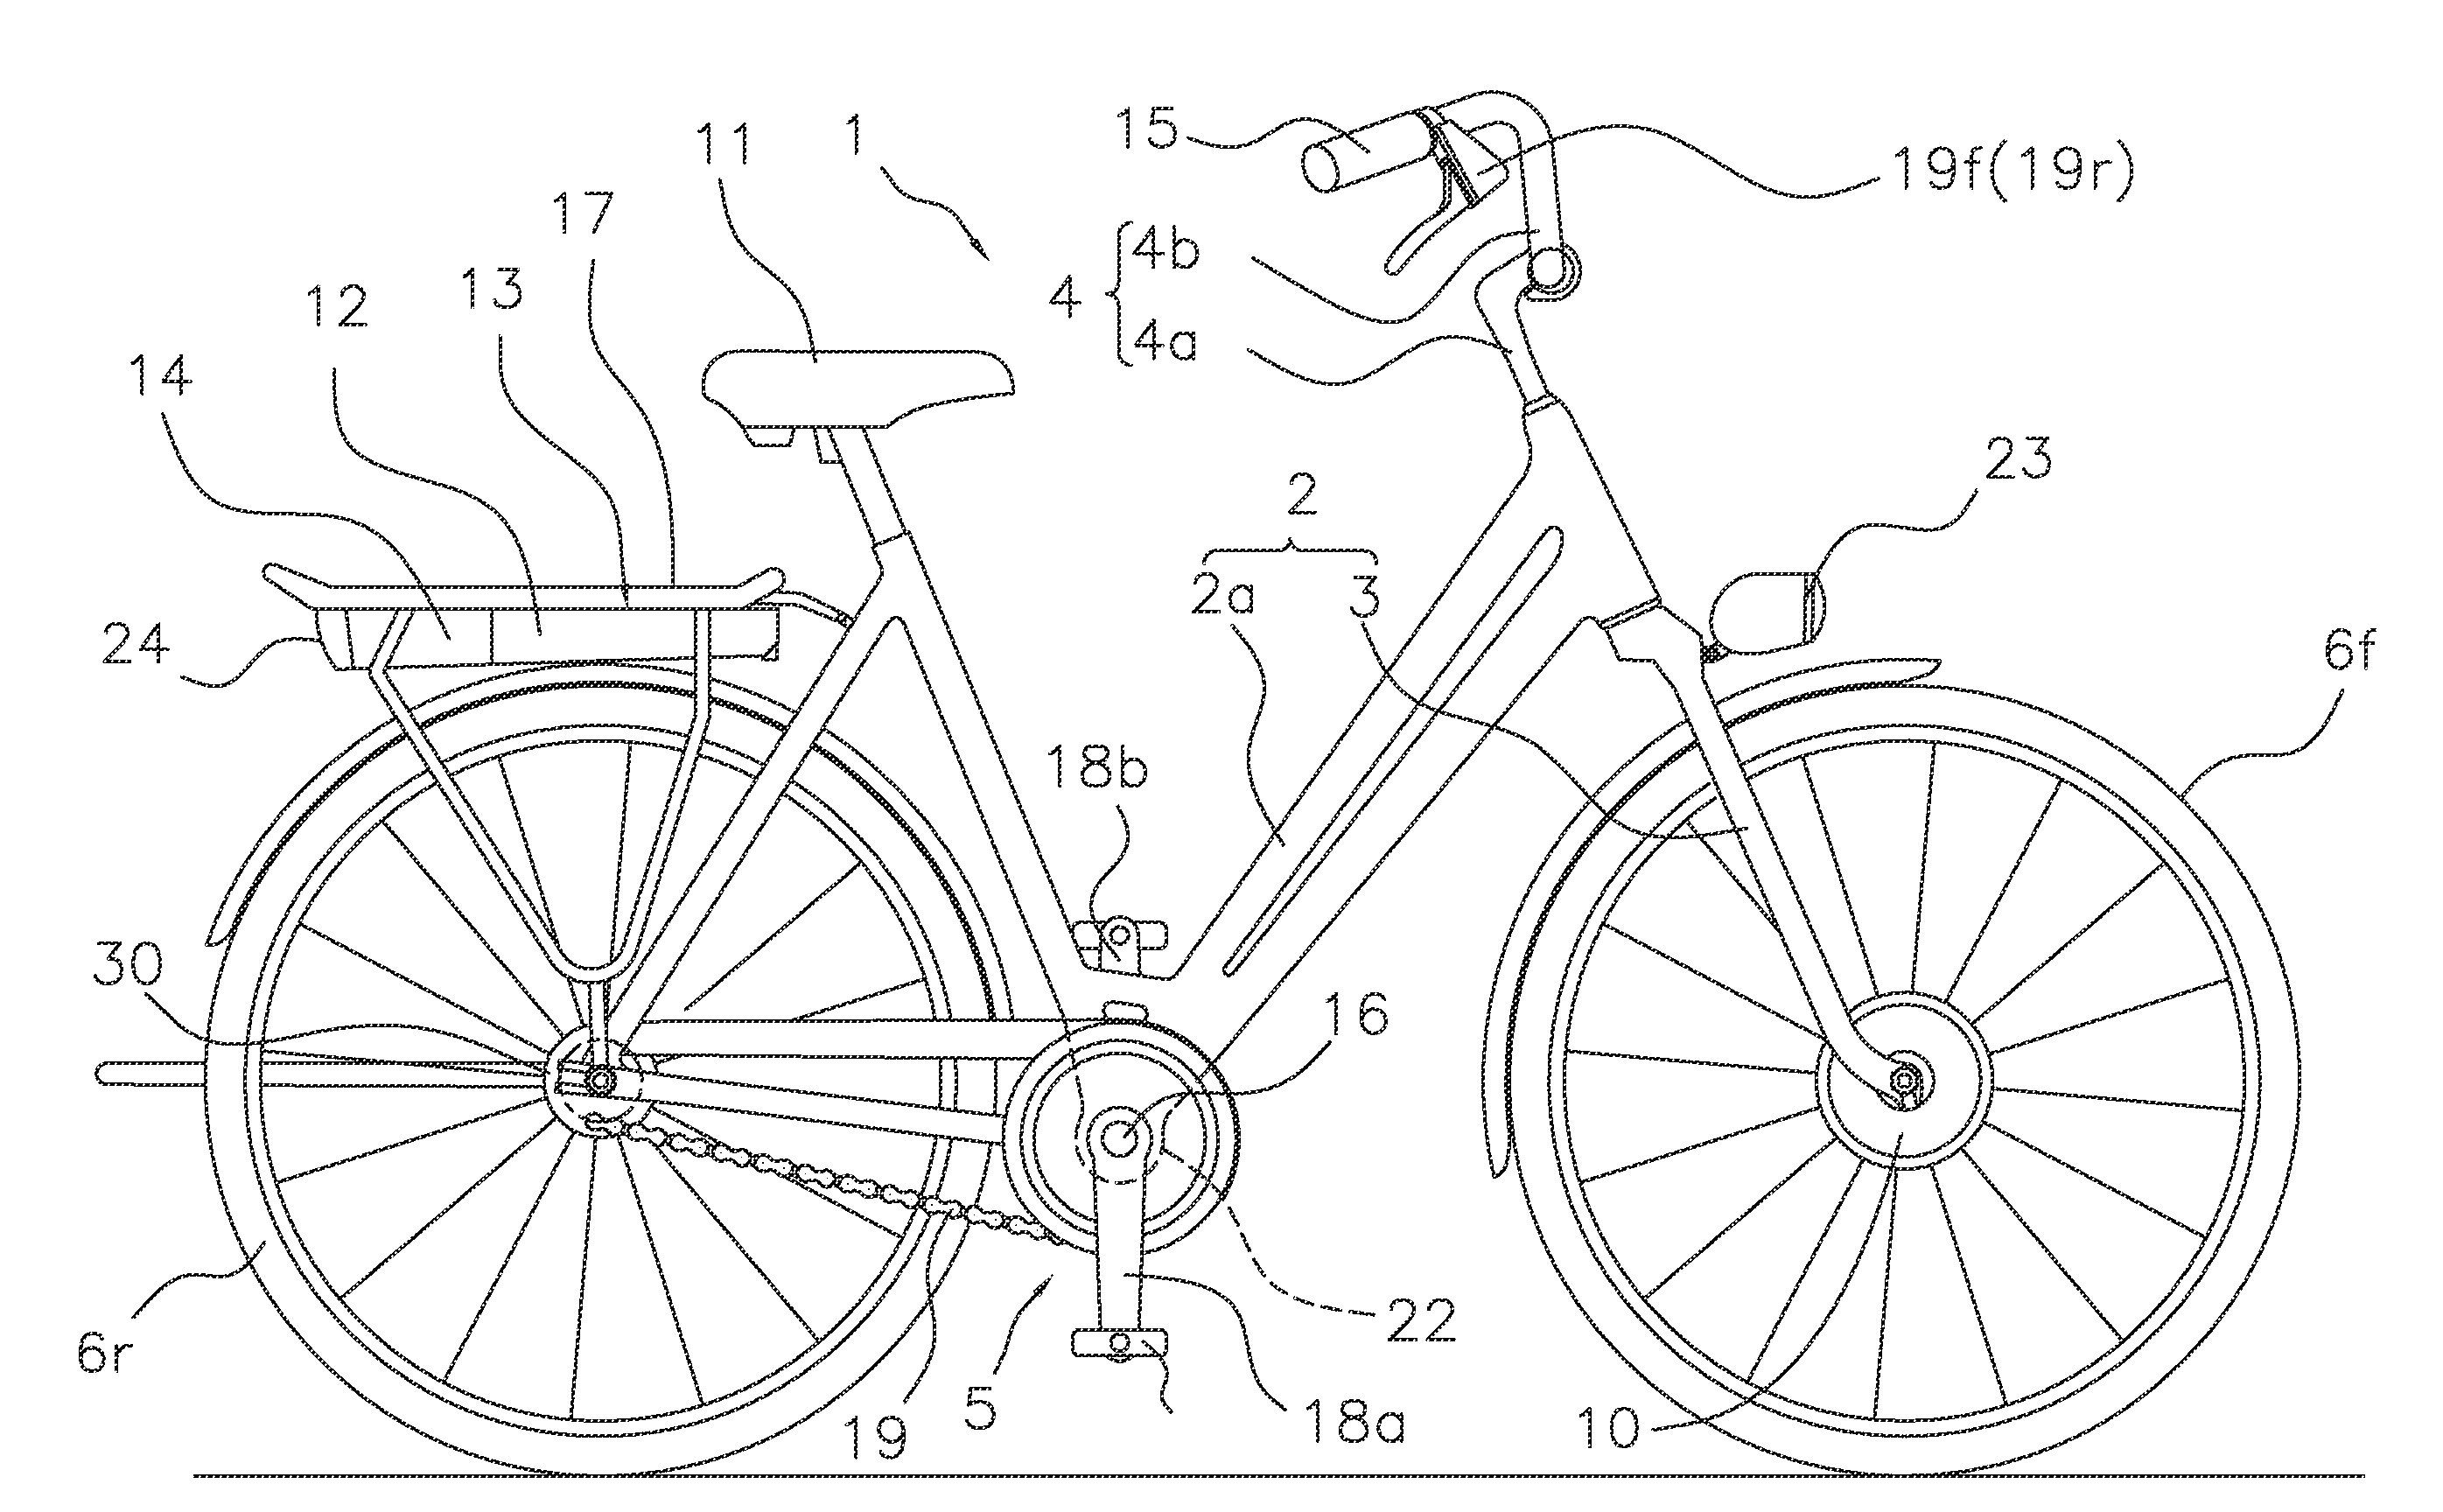 Bicycle motor control apparatus